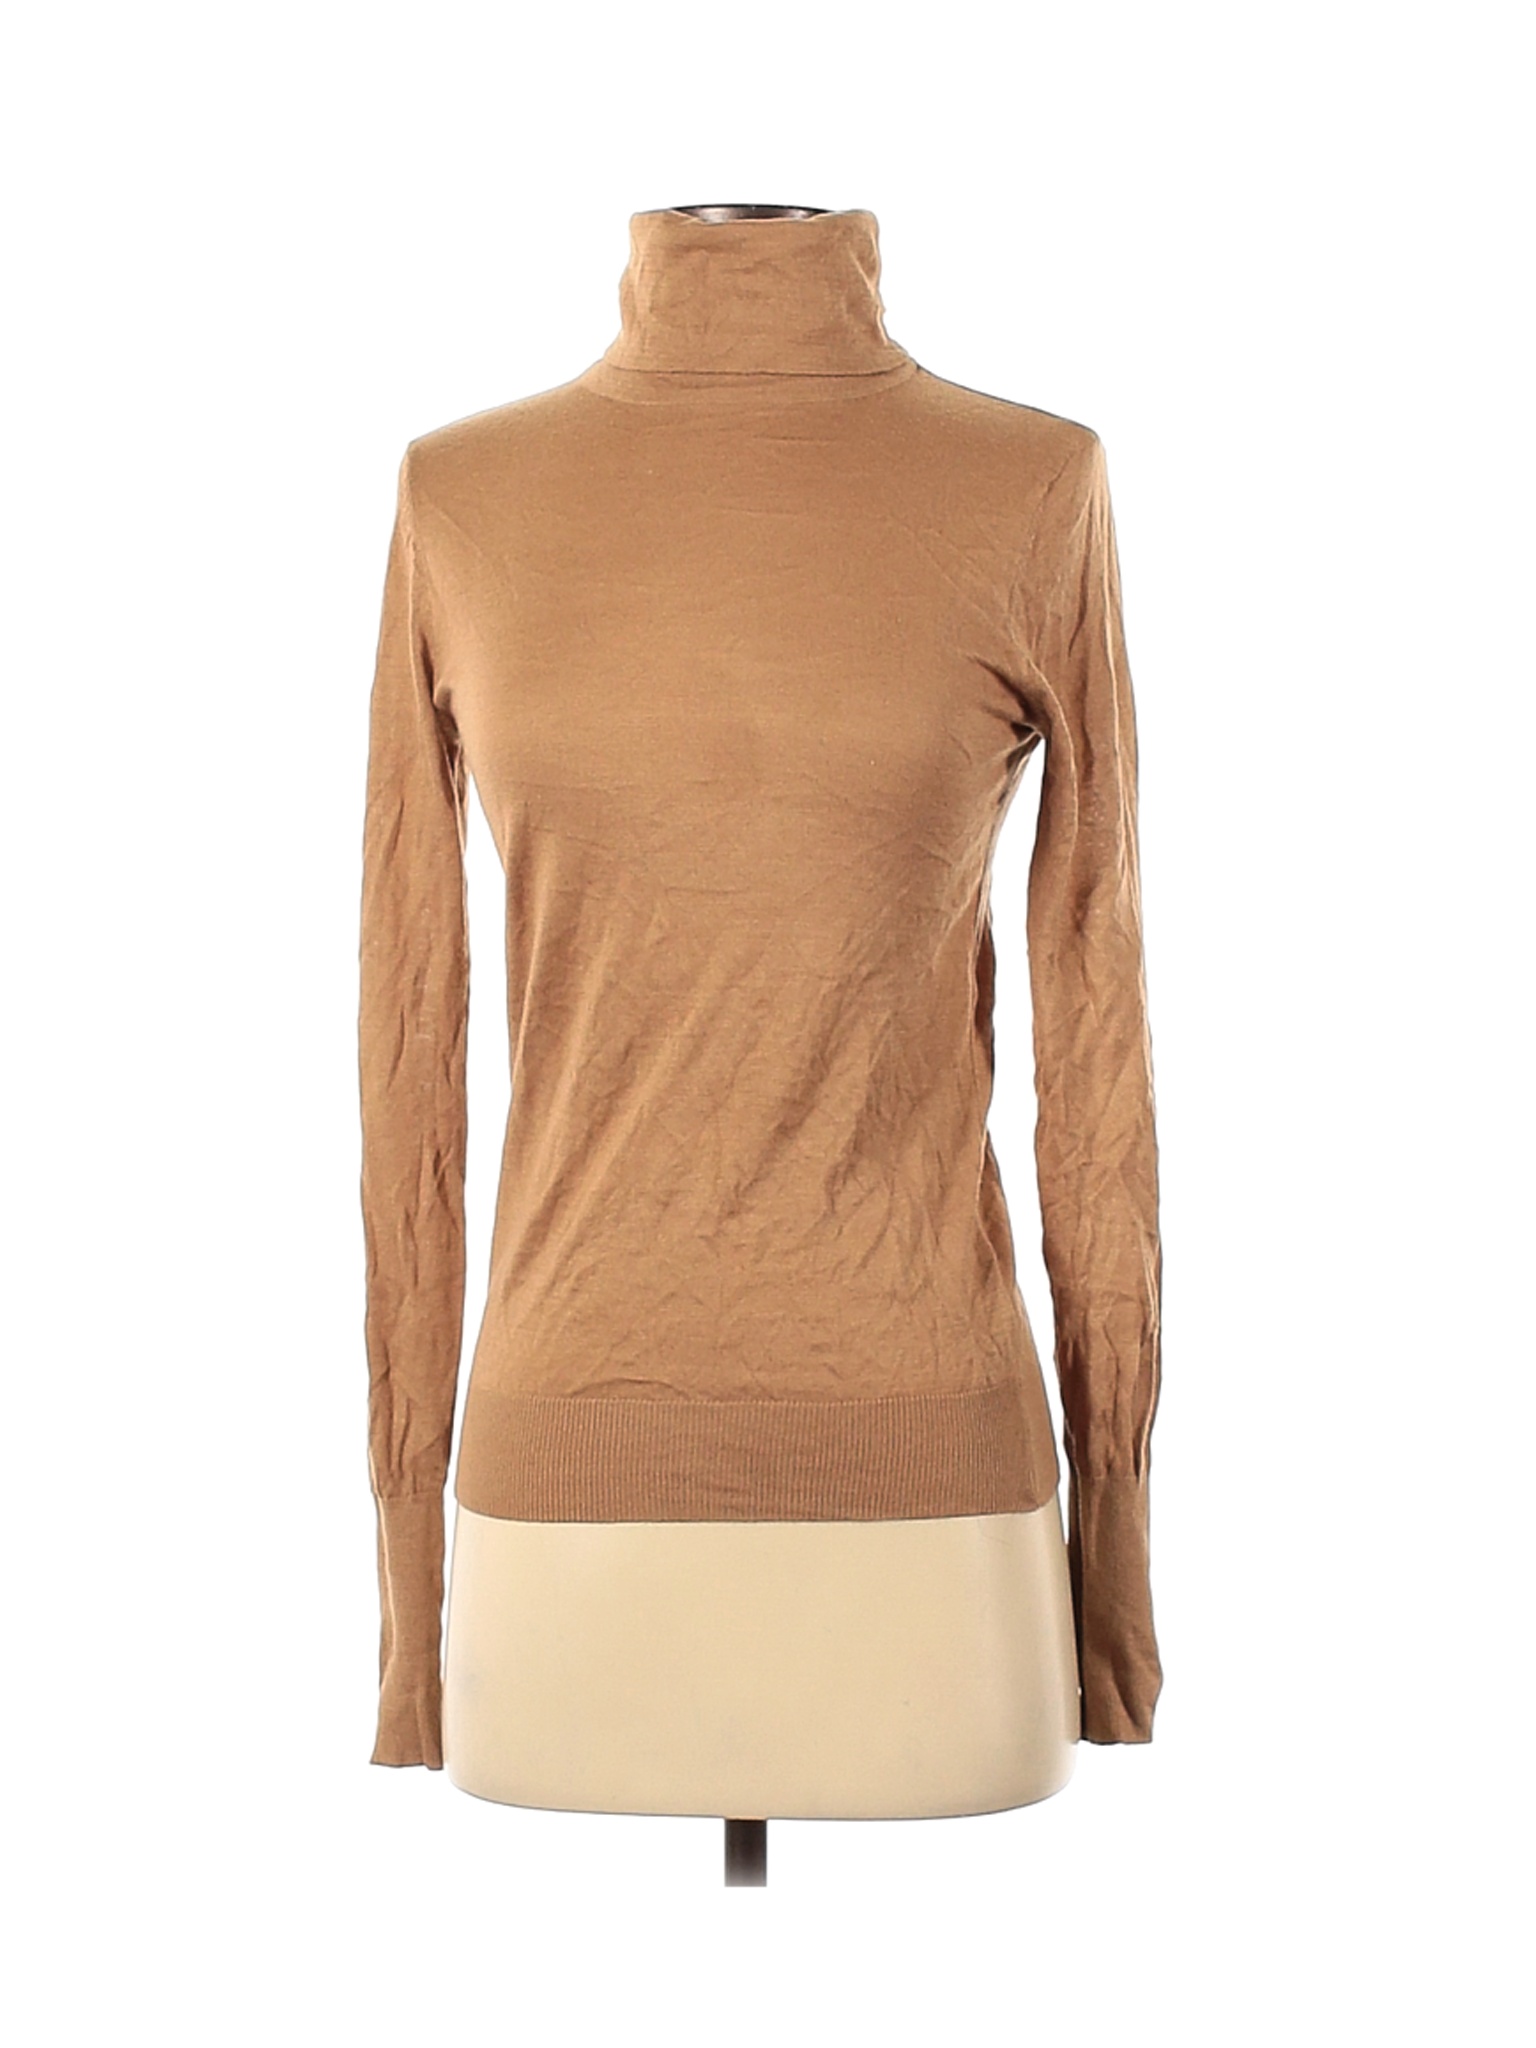 Zara Women Brown Turtleneck Sweater S | eBay